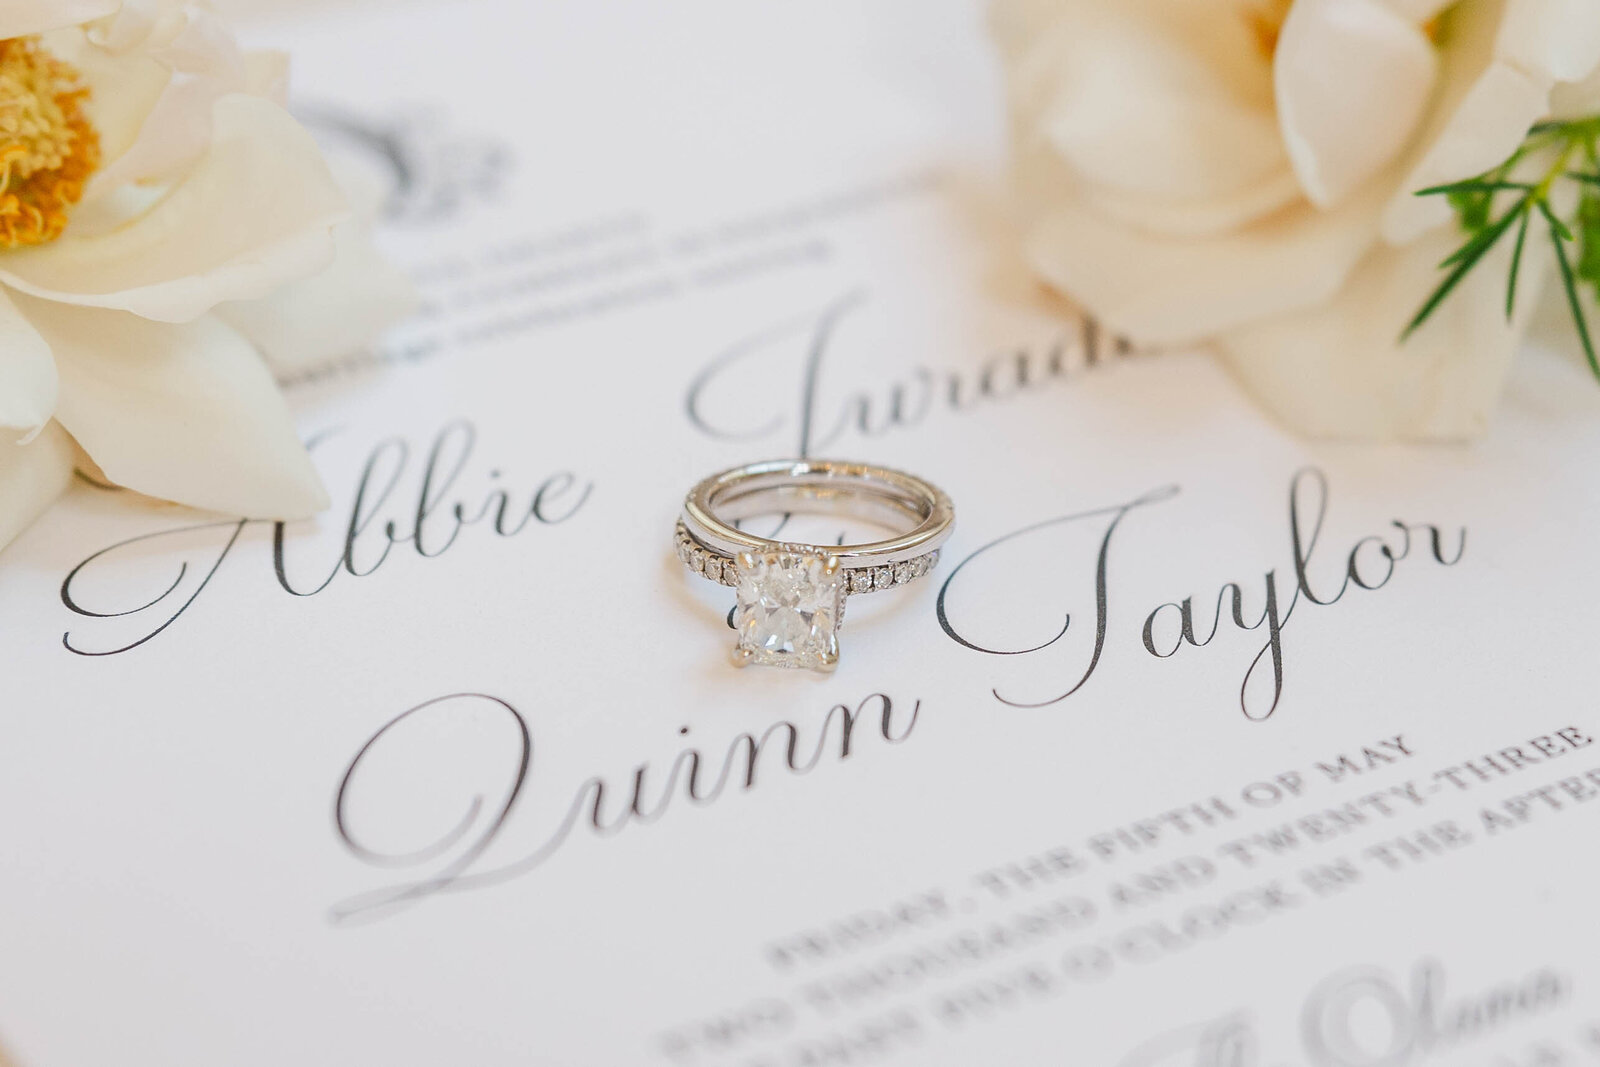 detail-shot-of-wedding-rings-on-invitation